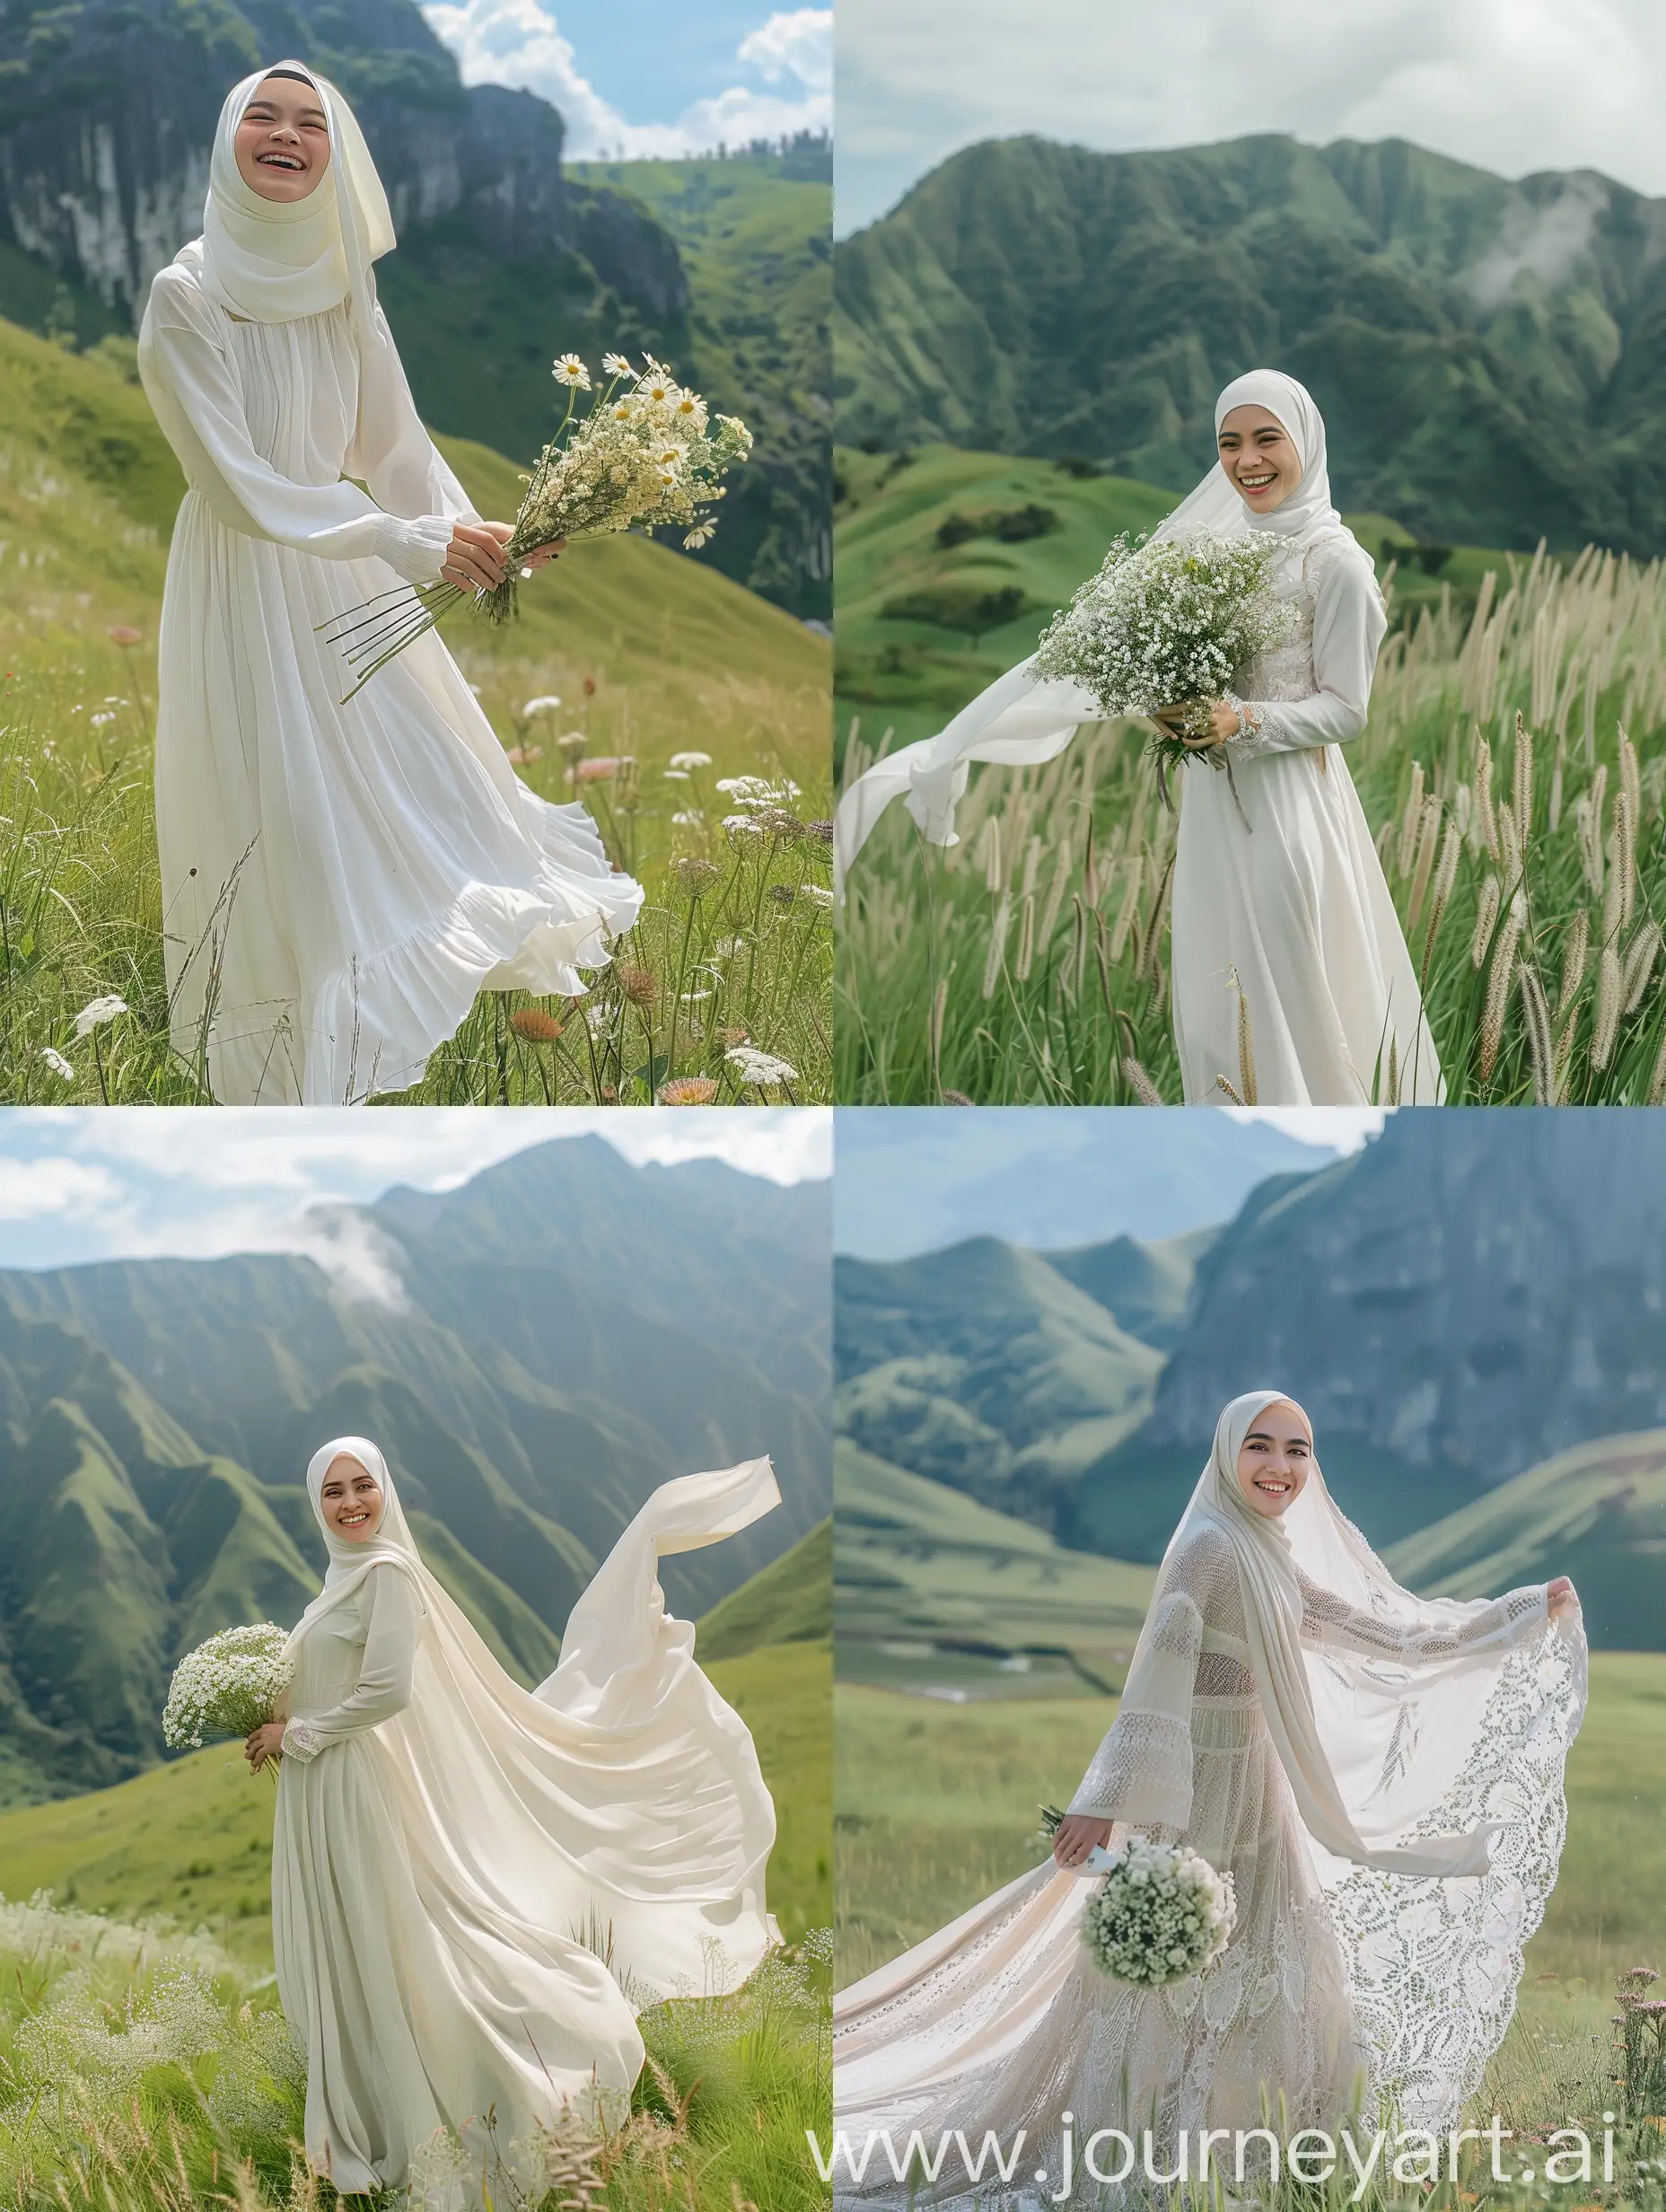 foto yang mempesona dari wanita hijab Indonesia yang sedang melakukan pose tertawa. Sang wanita mengenakan jilbab dan gaun putih panjang.berdiri di depan lapangan rumput hijau di dekat pegunungan dengan latar belakang pegunungan. Sang wanita berdiri tegak memegang bunga buket cantik.badan dan wajah menghadap kamera.